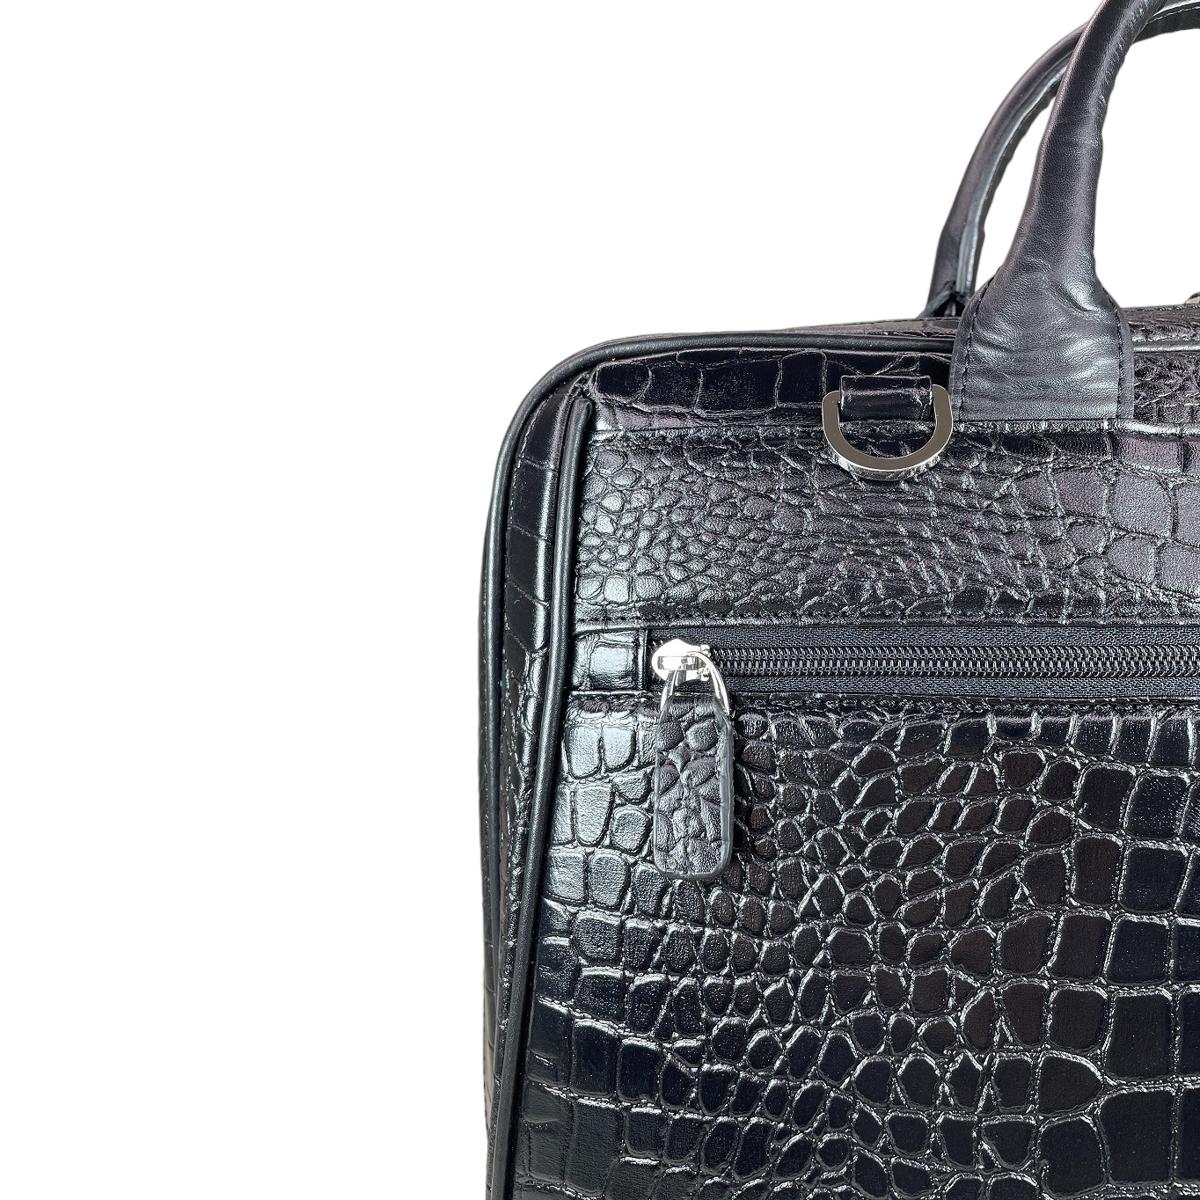 LeatherLuxe - Black Crocodile Style Leather Unisex Bag: Laptop Bag Genuine leather Designer Premium leather bag for women leather hobo tote messenger bag Leather Accessories Leather Shop Leather Goods